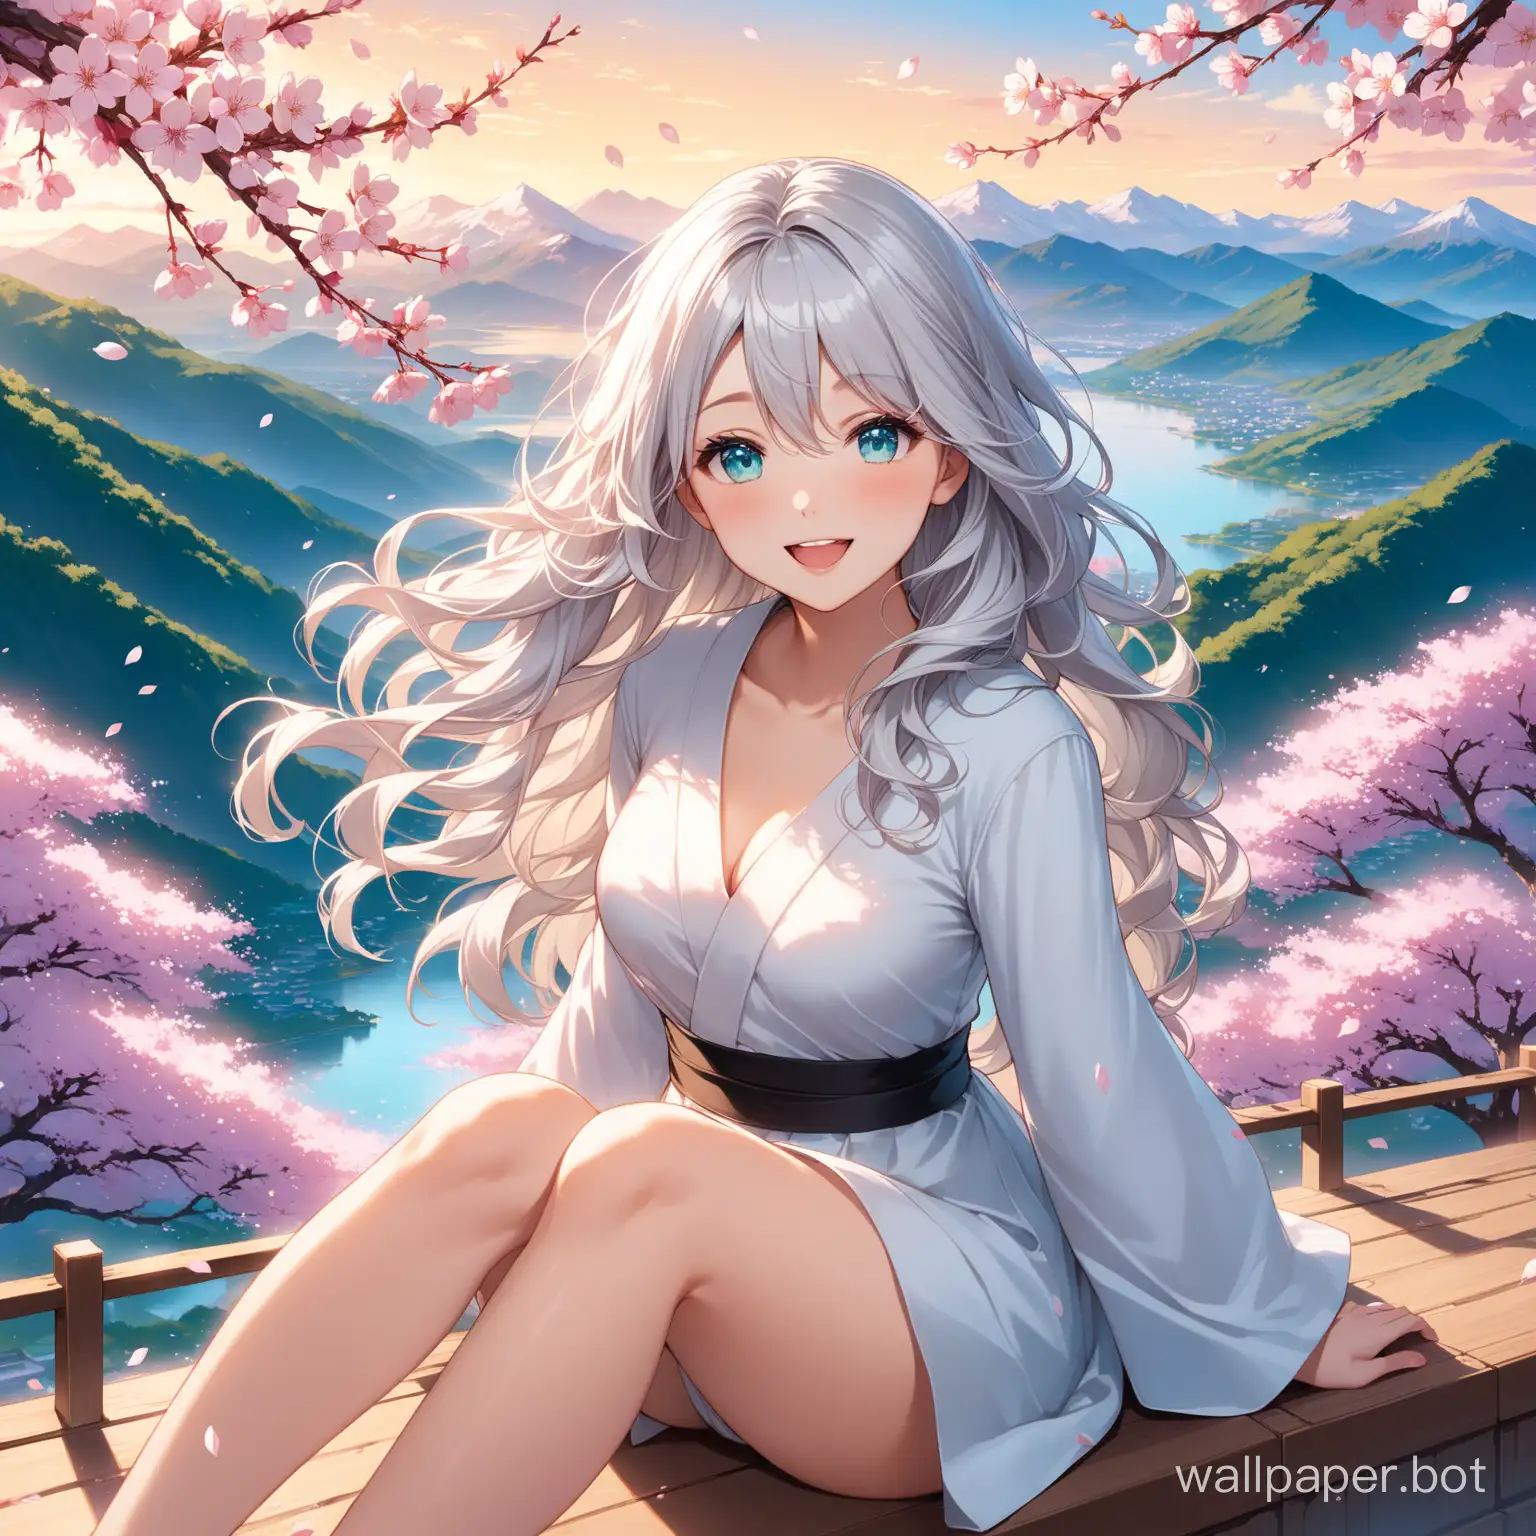 Serene-Girl-with-Silver-Hair-Admiring-Cherry-Blossoms-in-Mountainous-Horizon